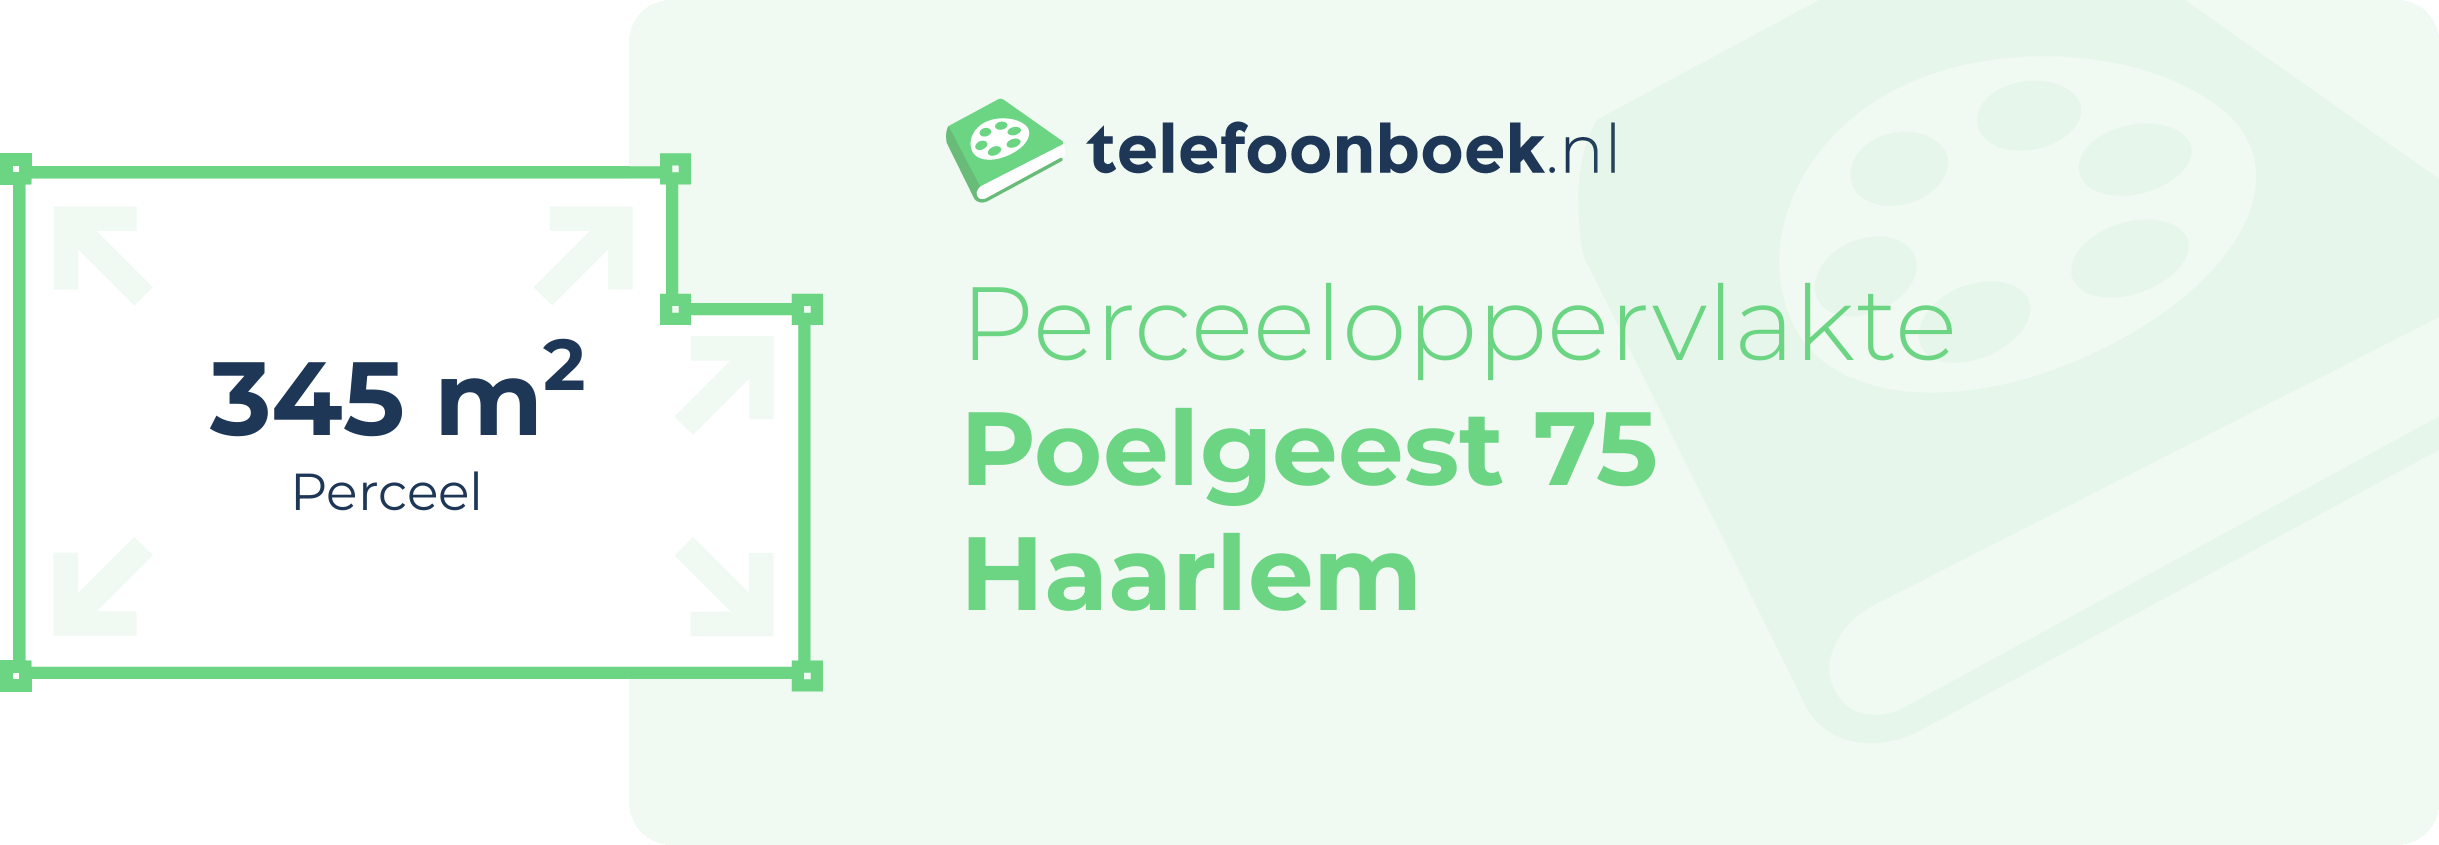 Perceeloppervlakte Poelgeest 75 Haarlem